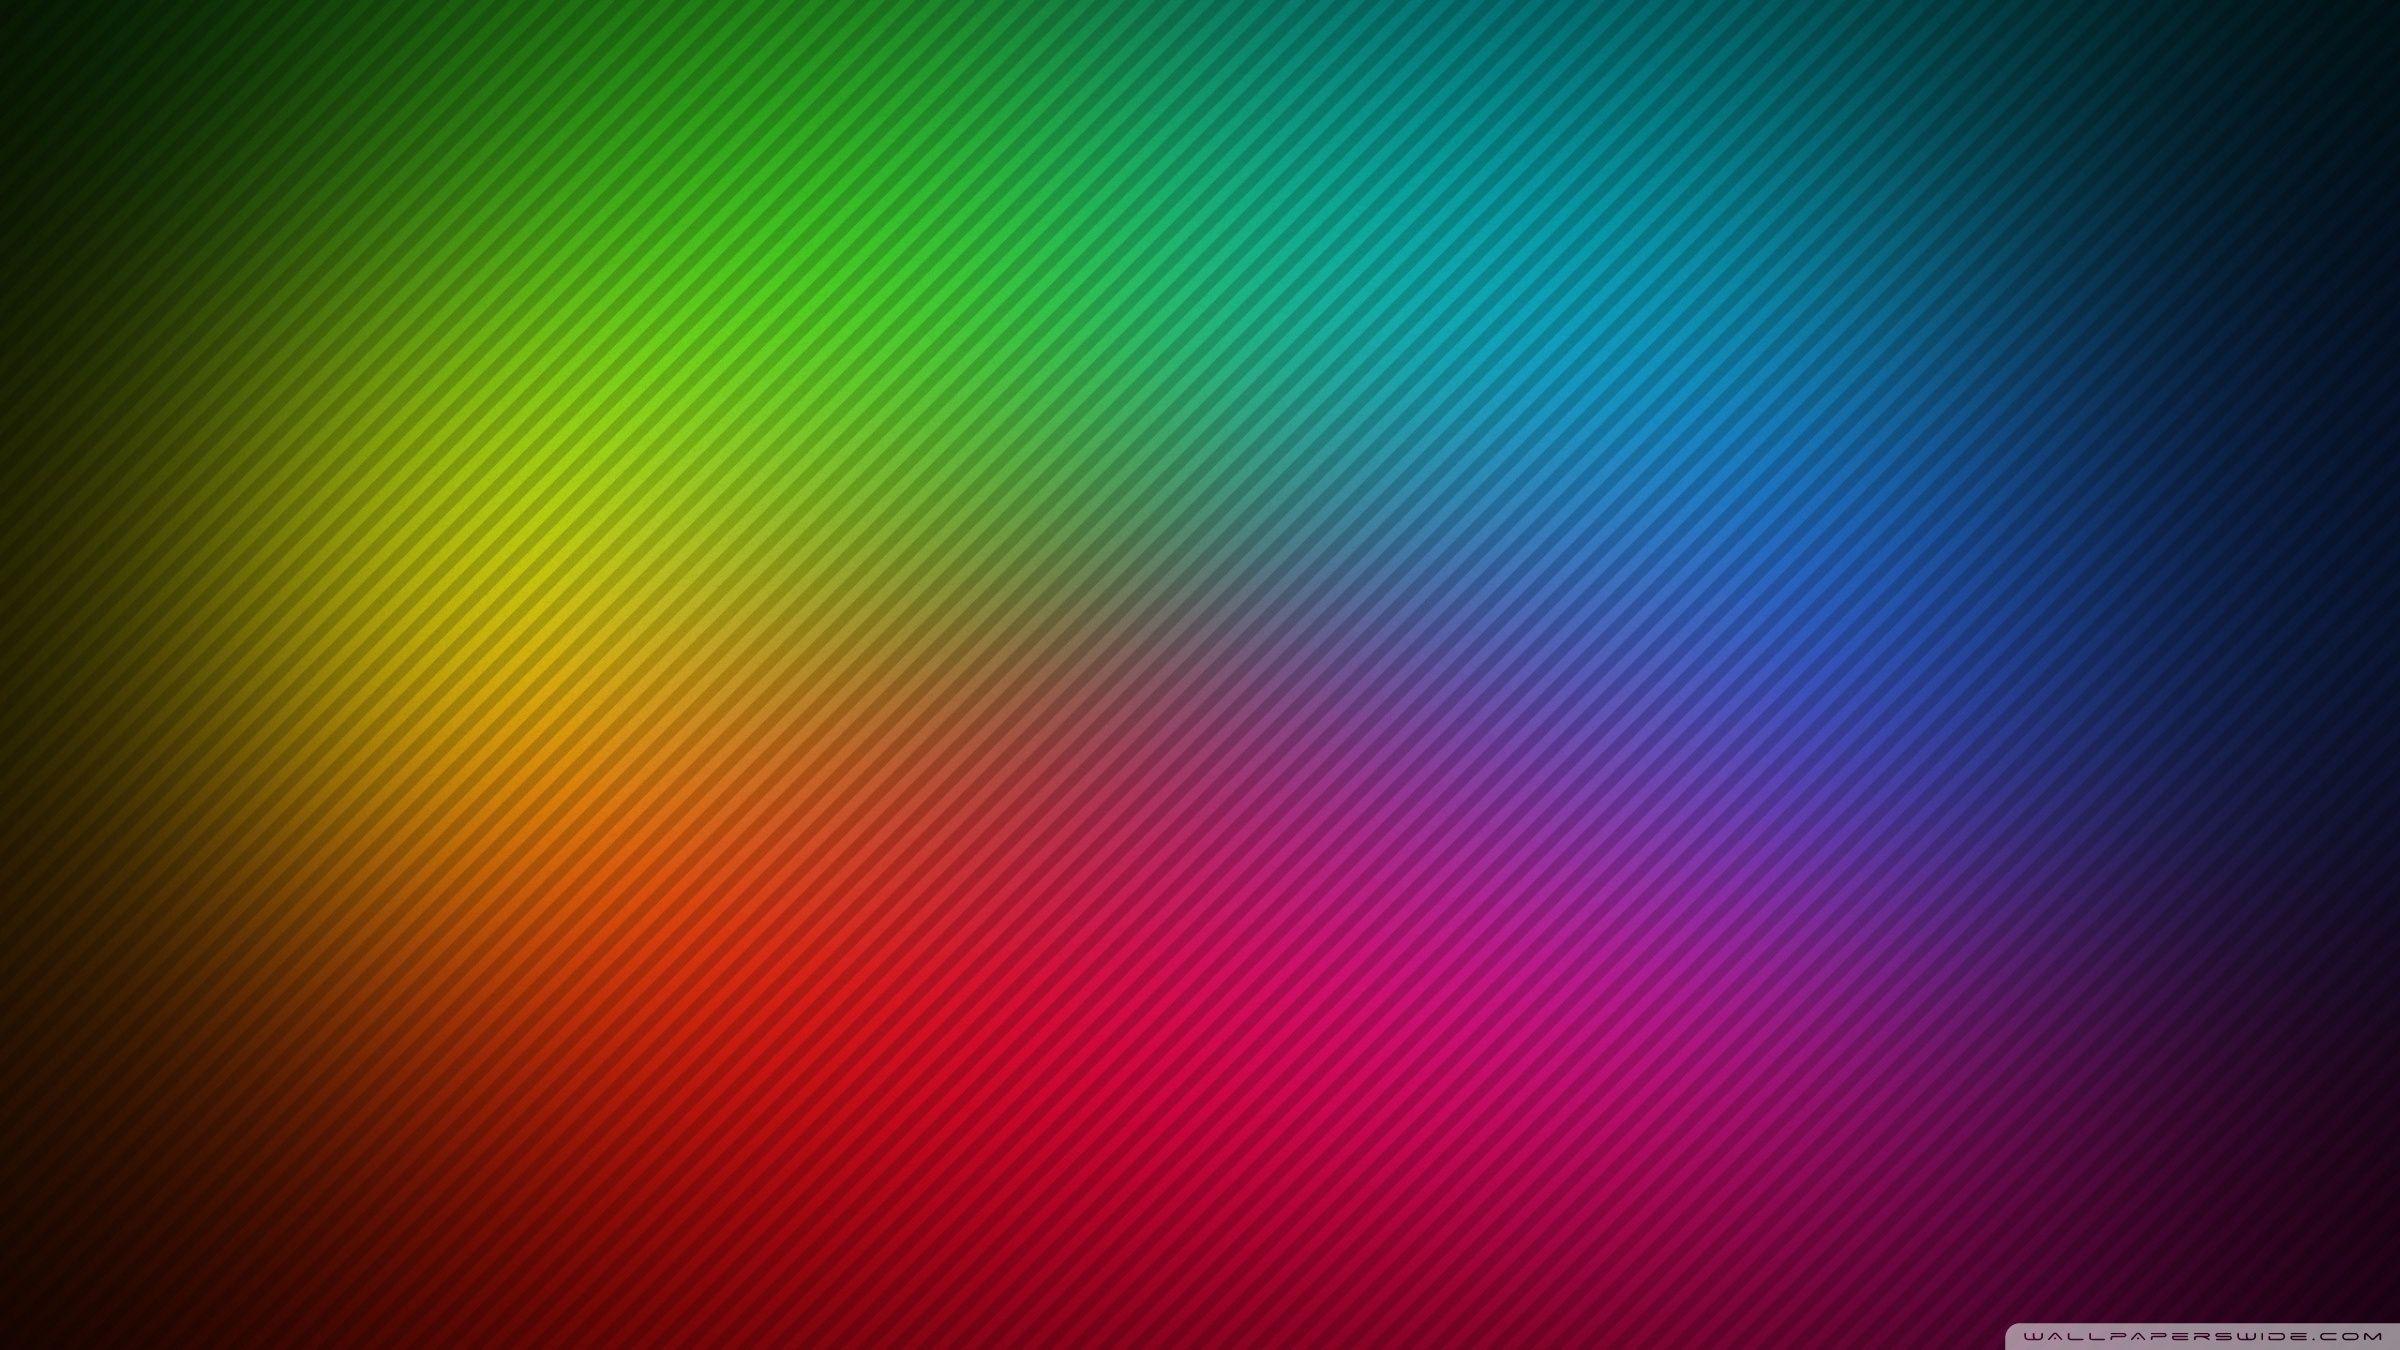  52 RGB  Wallpaper  on WallpaperSafari